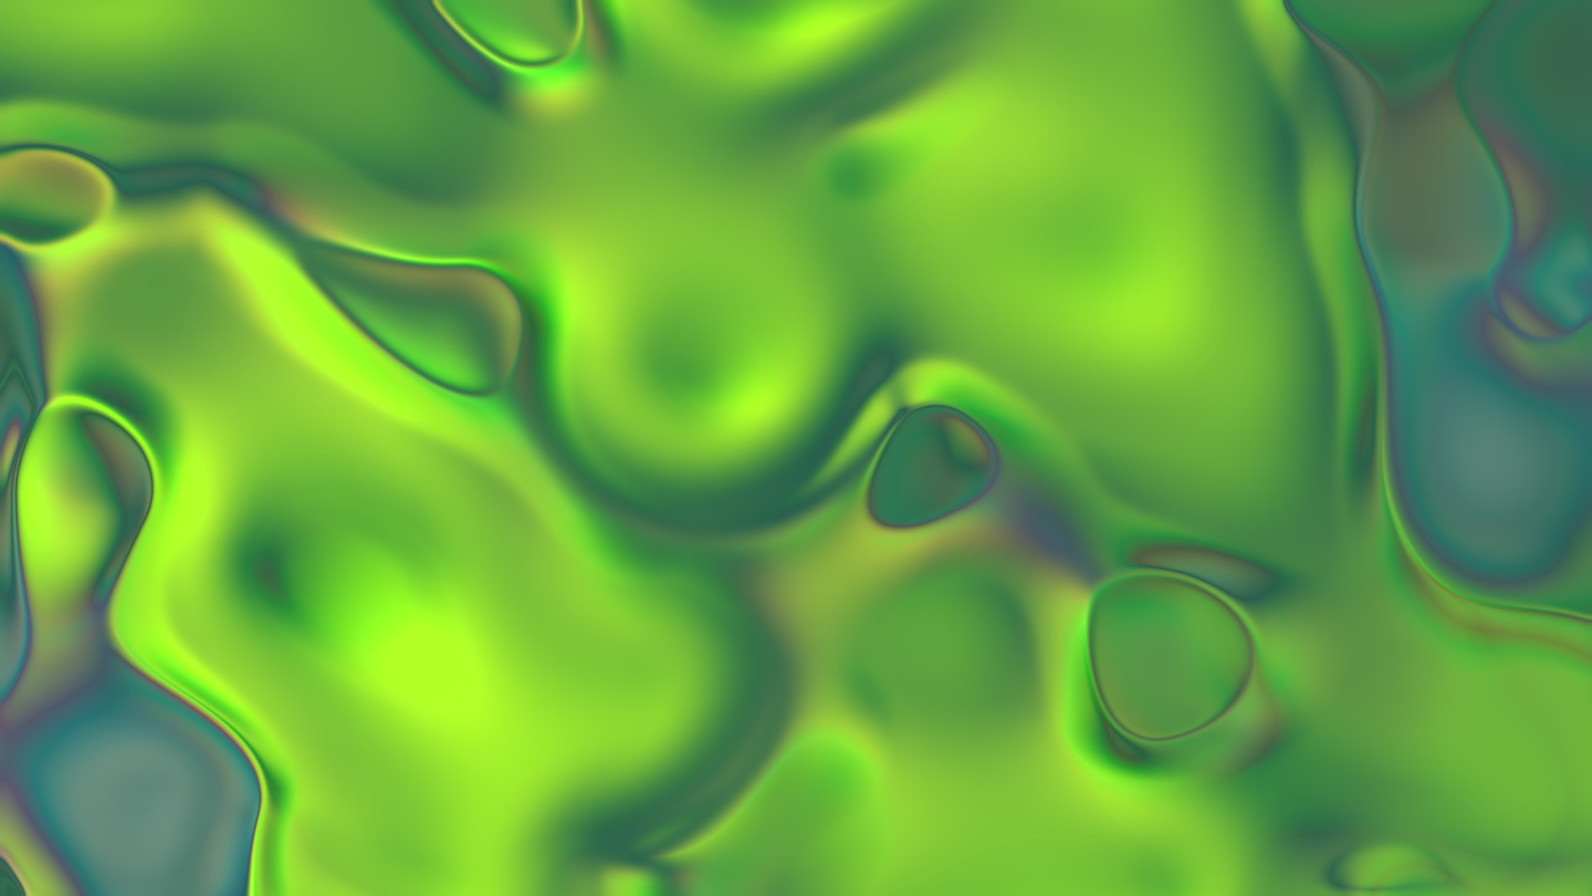 Abstract Liquid Animation 05